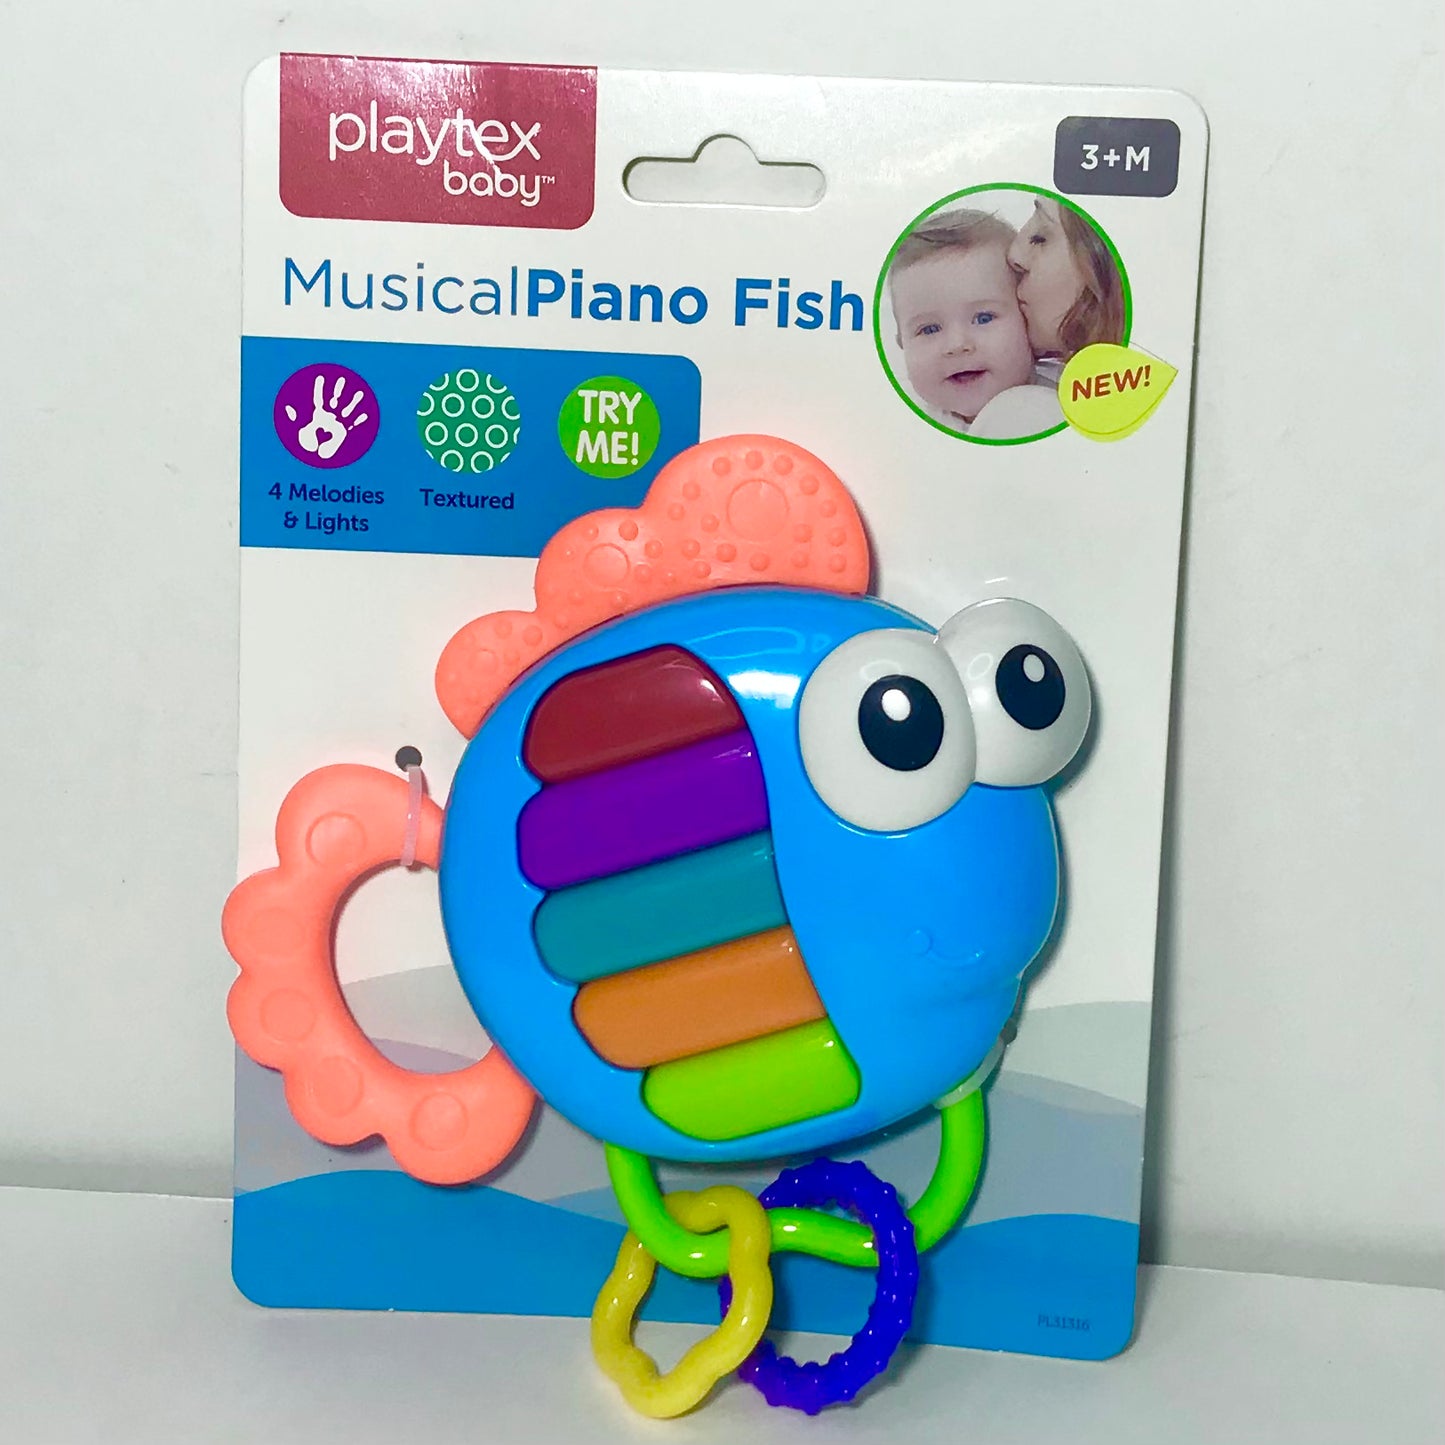 babyking bondigo Smart Stages piano fish Toddler Toy Music Sounds Learning